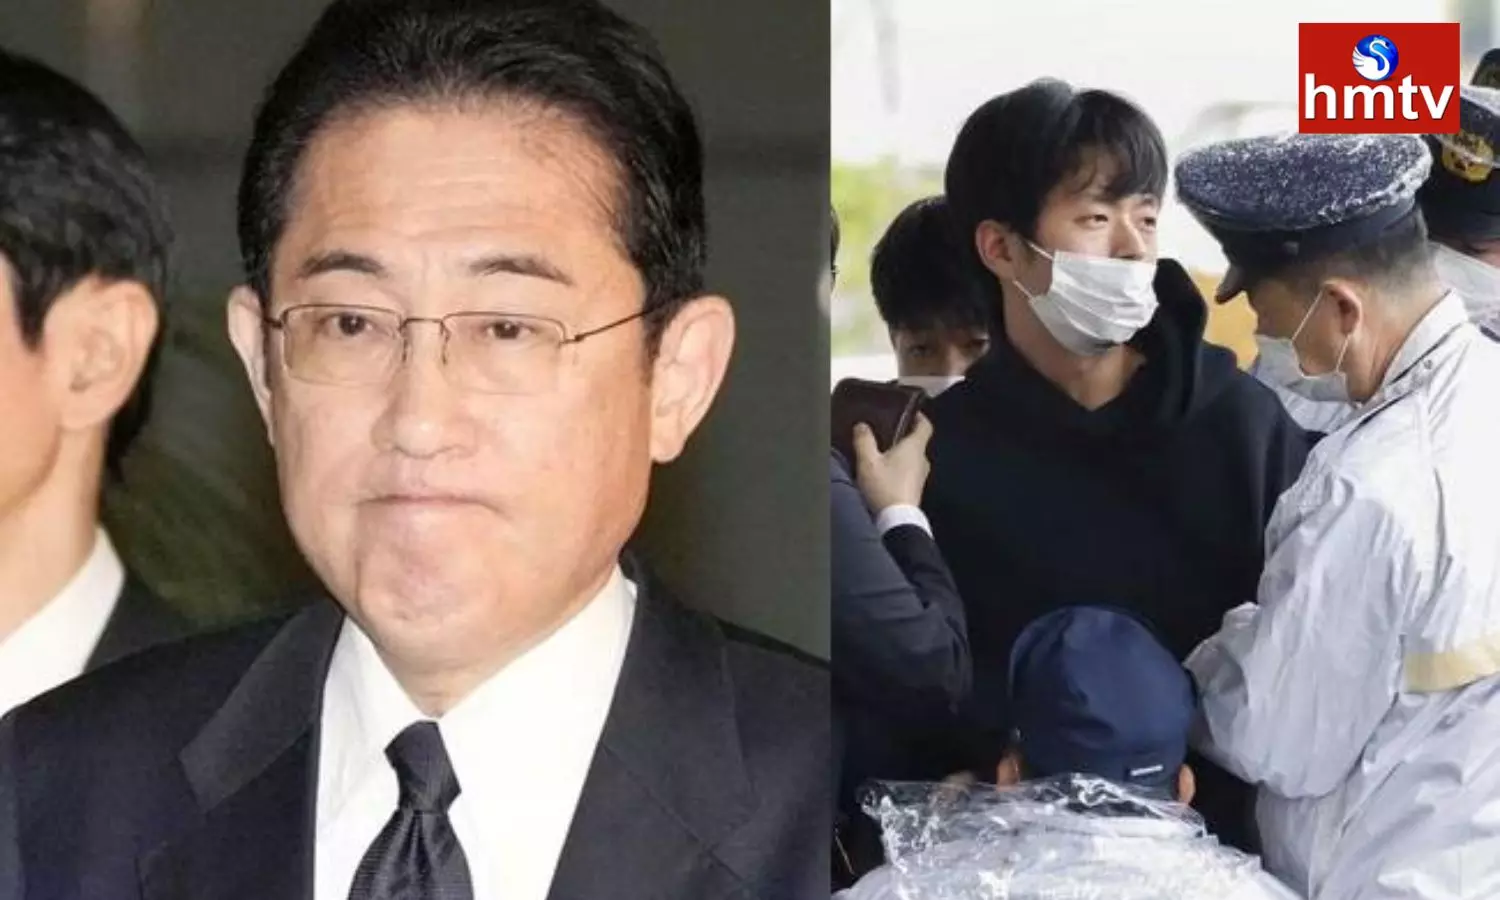 A Pipe Like Object was Thrown Near Japanese PM Fumio Kishida